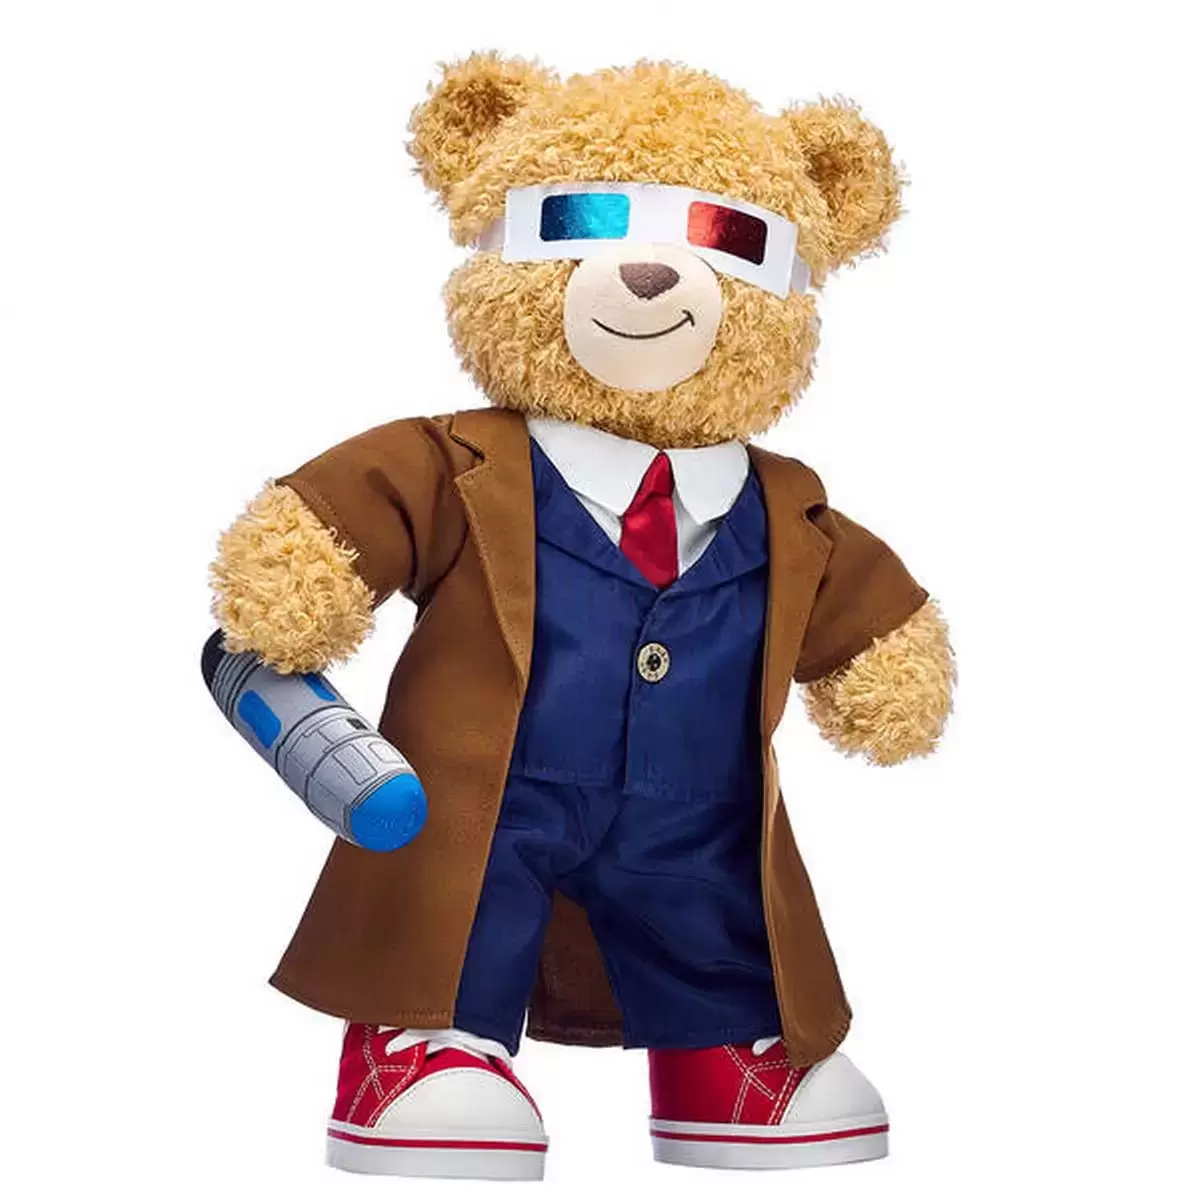 Bears - Tenth Doctor